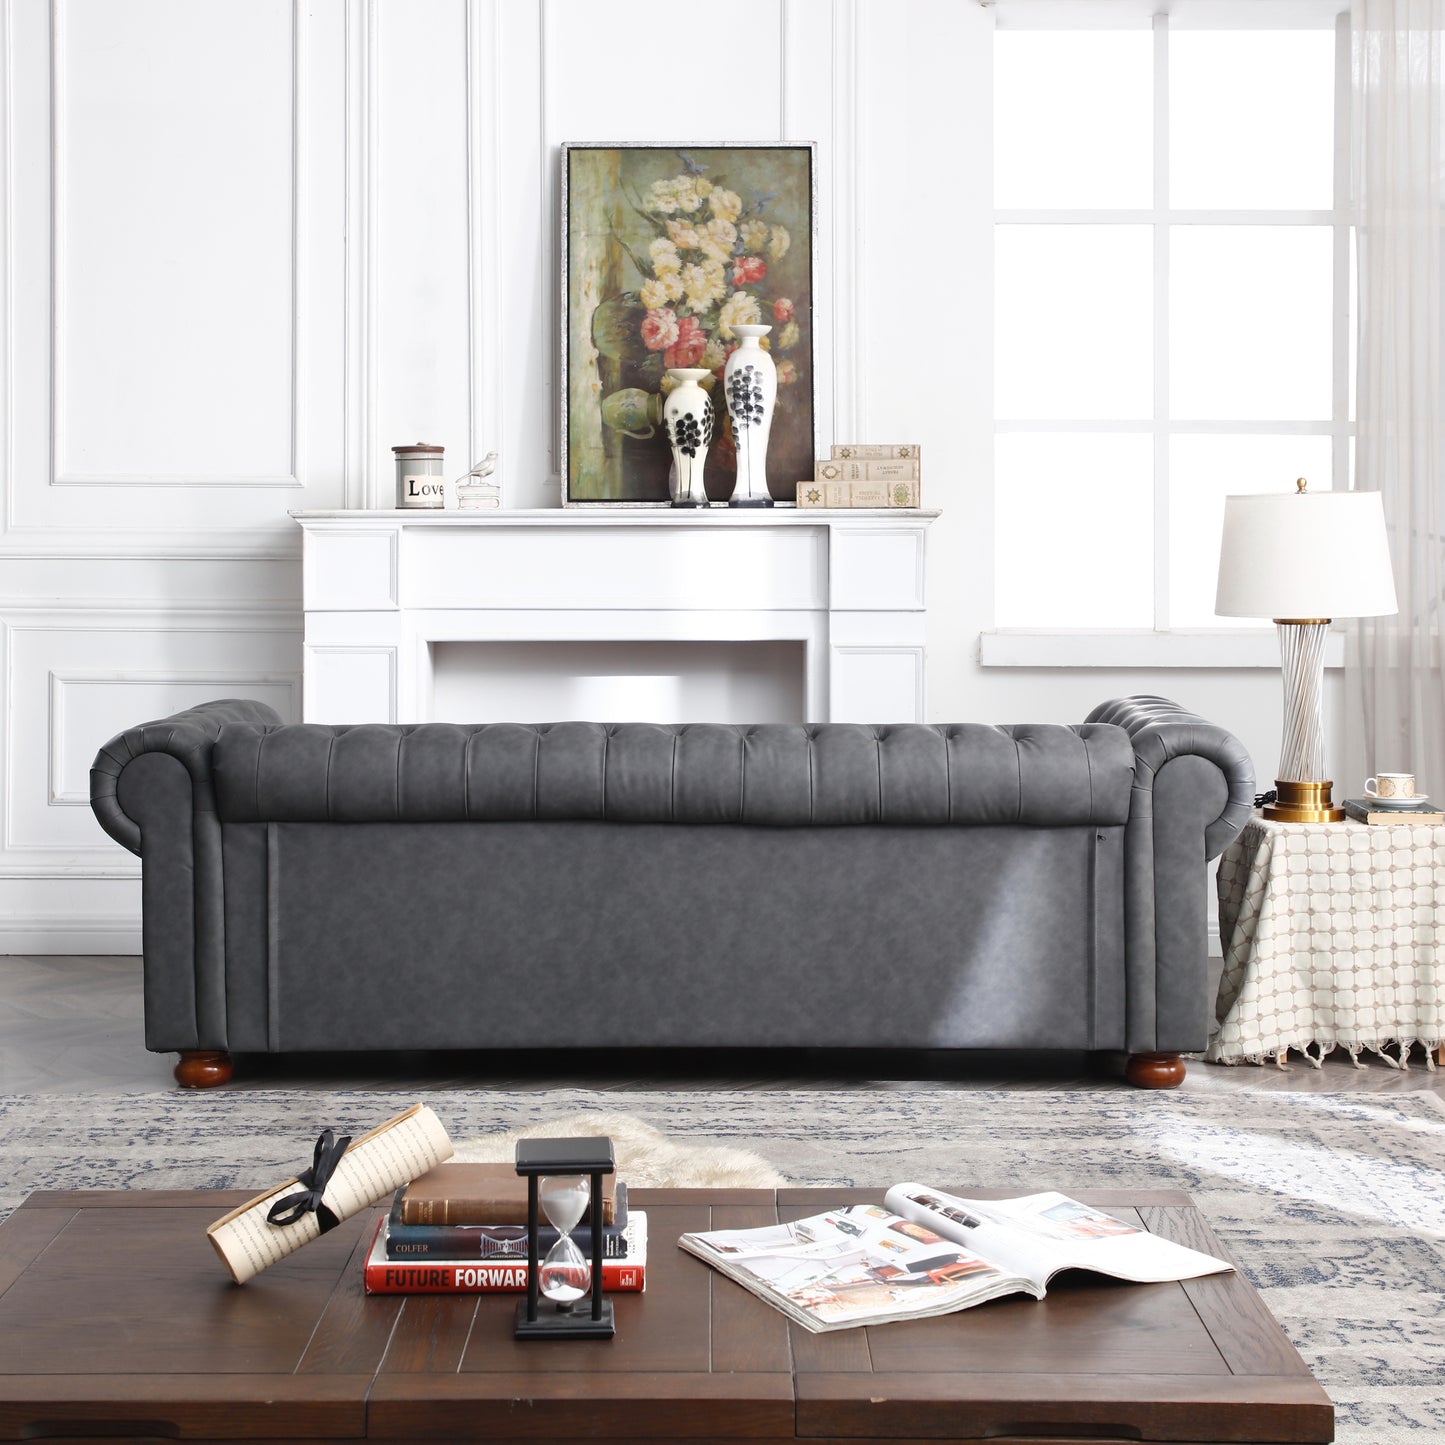 Dark Grey Vegan Leather Tufted Sofa